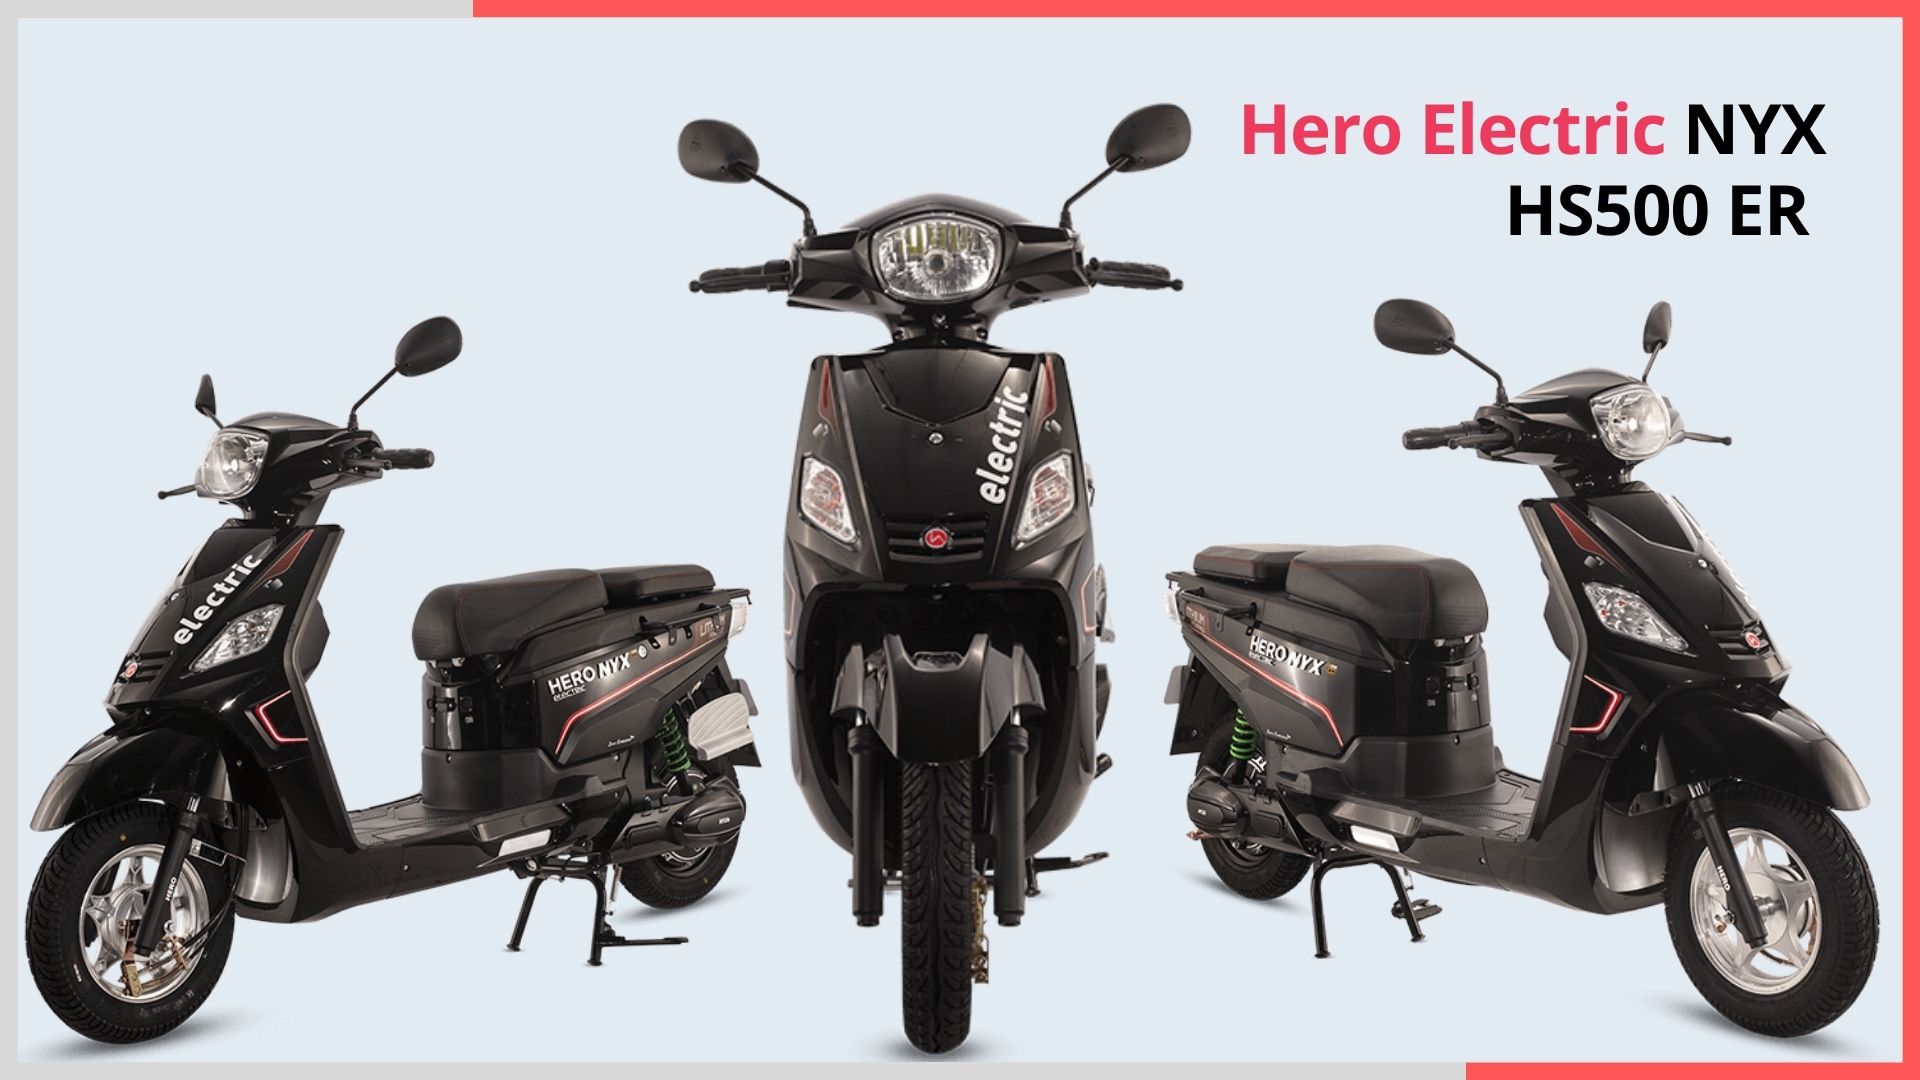 https://carandbike24.com/hero-electric-nyx-hs500-er-on-road-price-in-india/